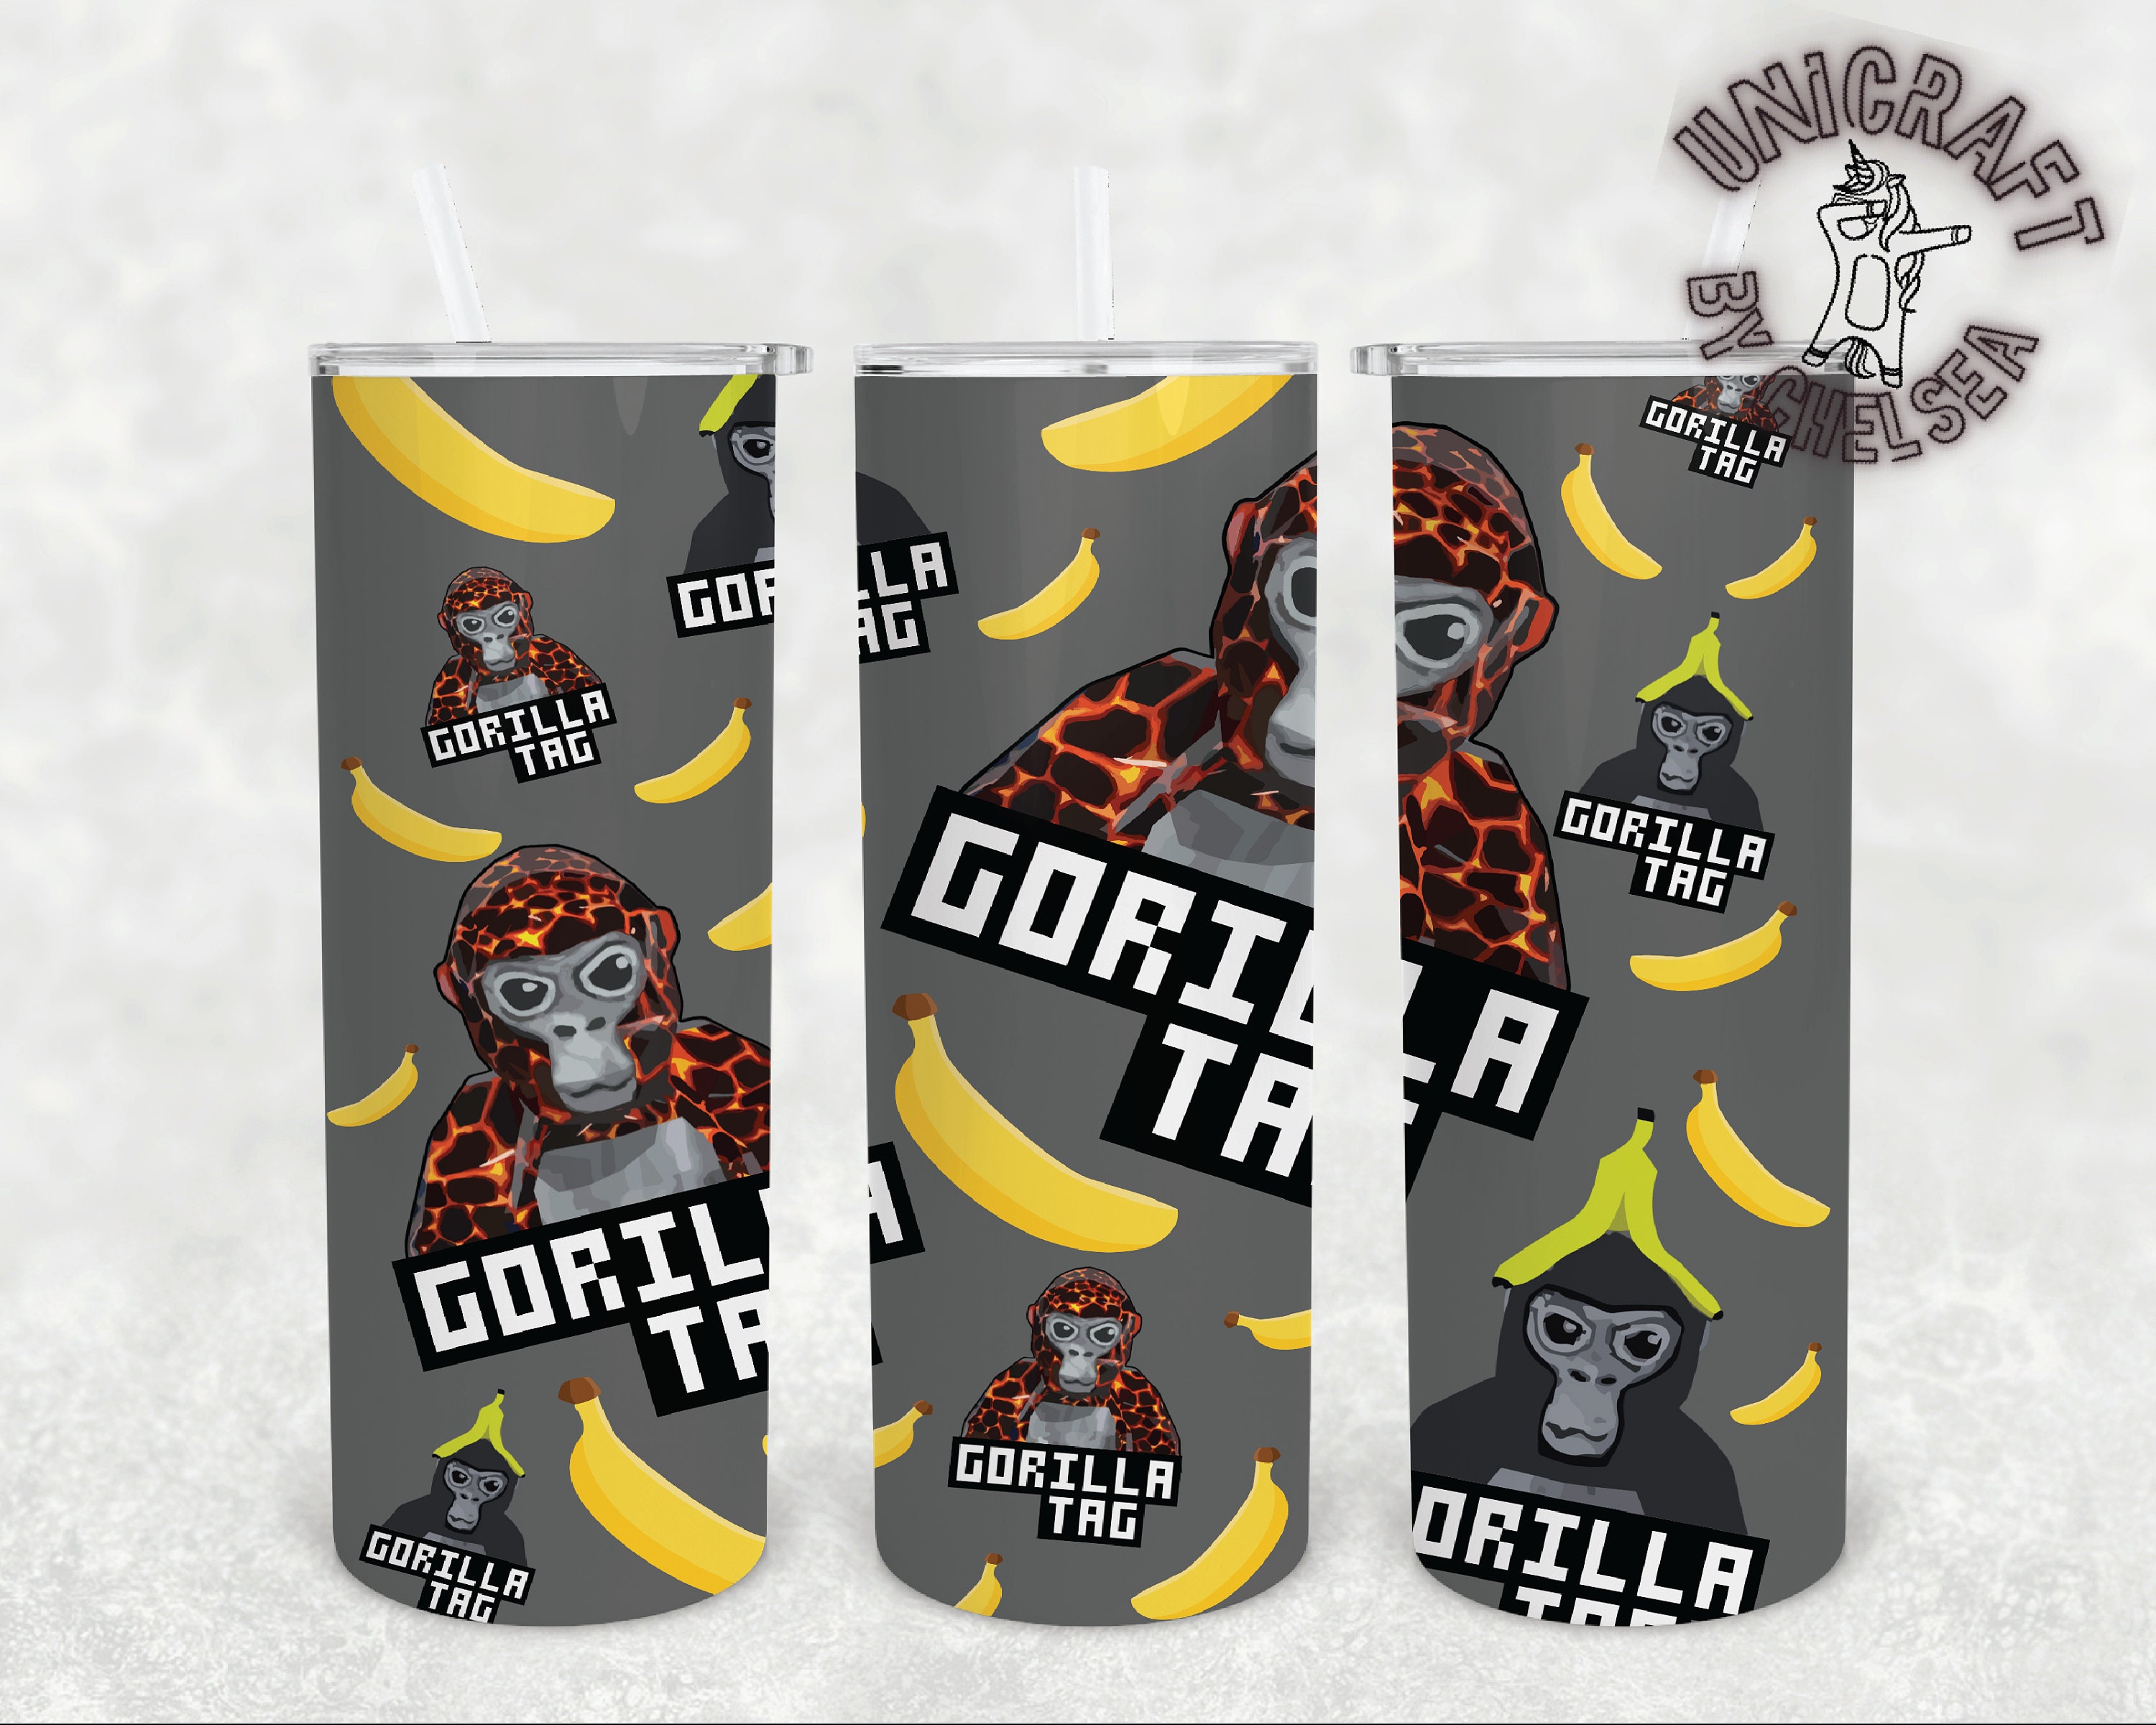 Gorilla tag Sticker by Ueti